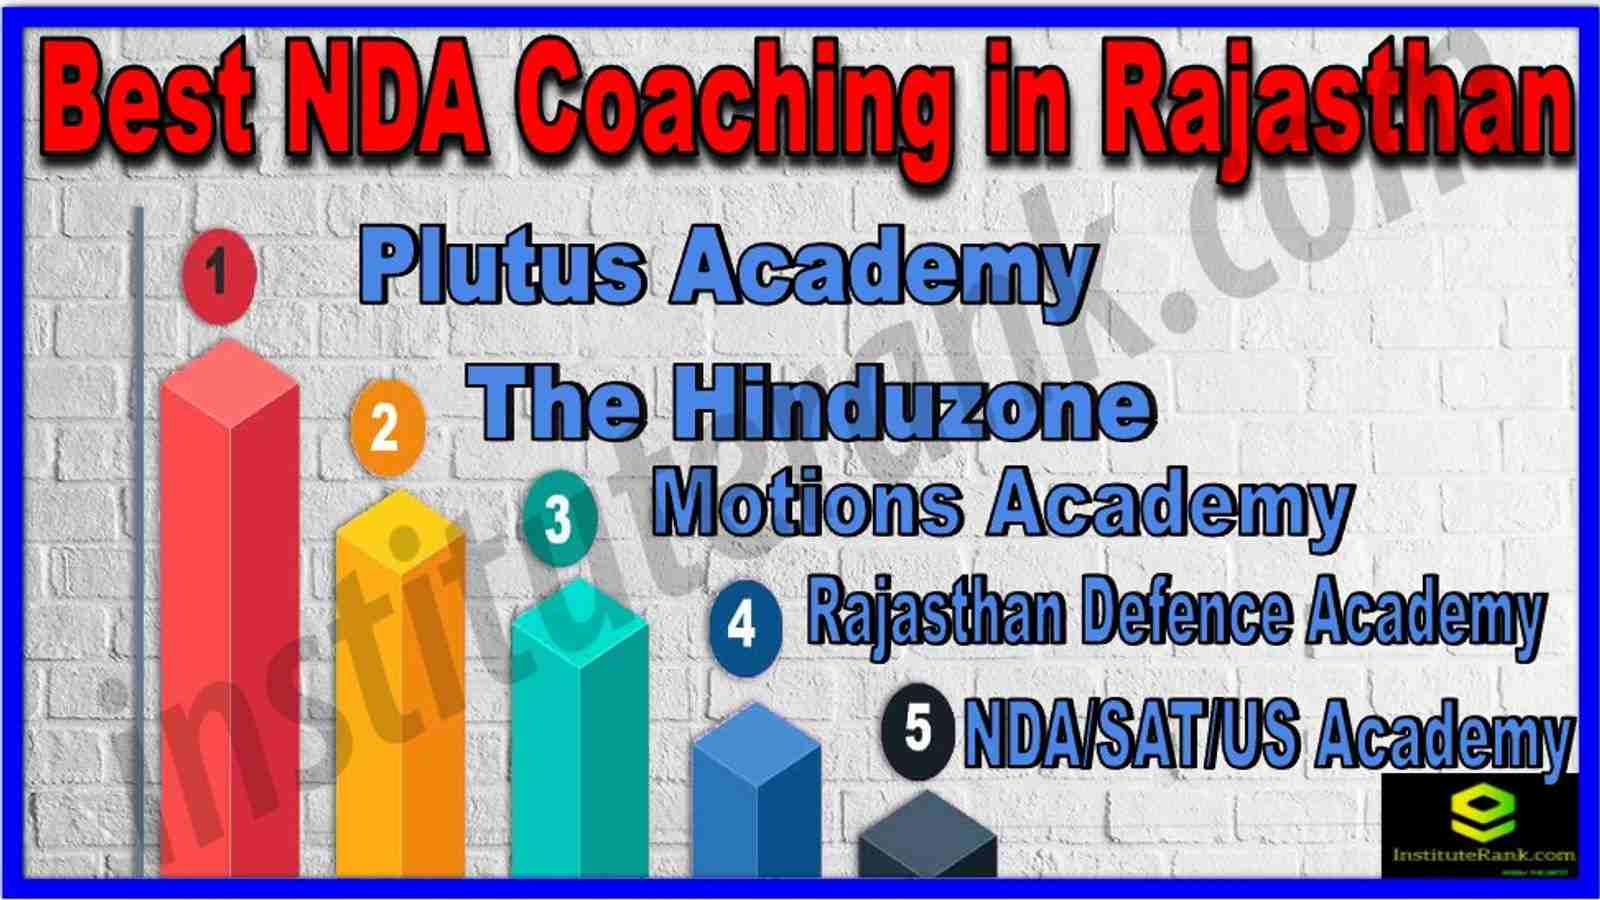 Best NDA Coaching in Rajasthan